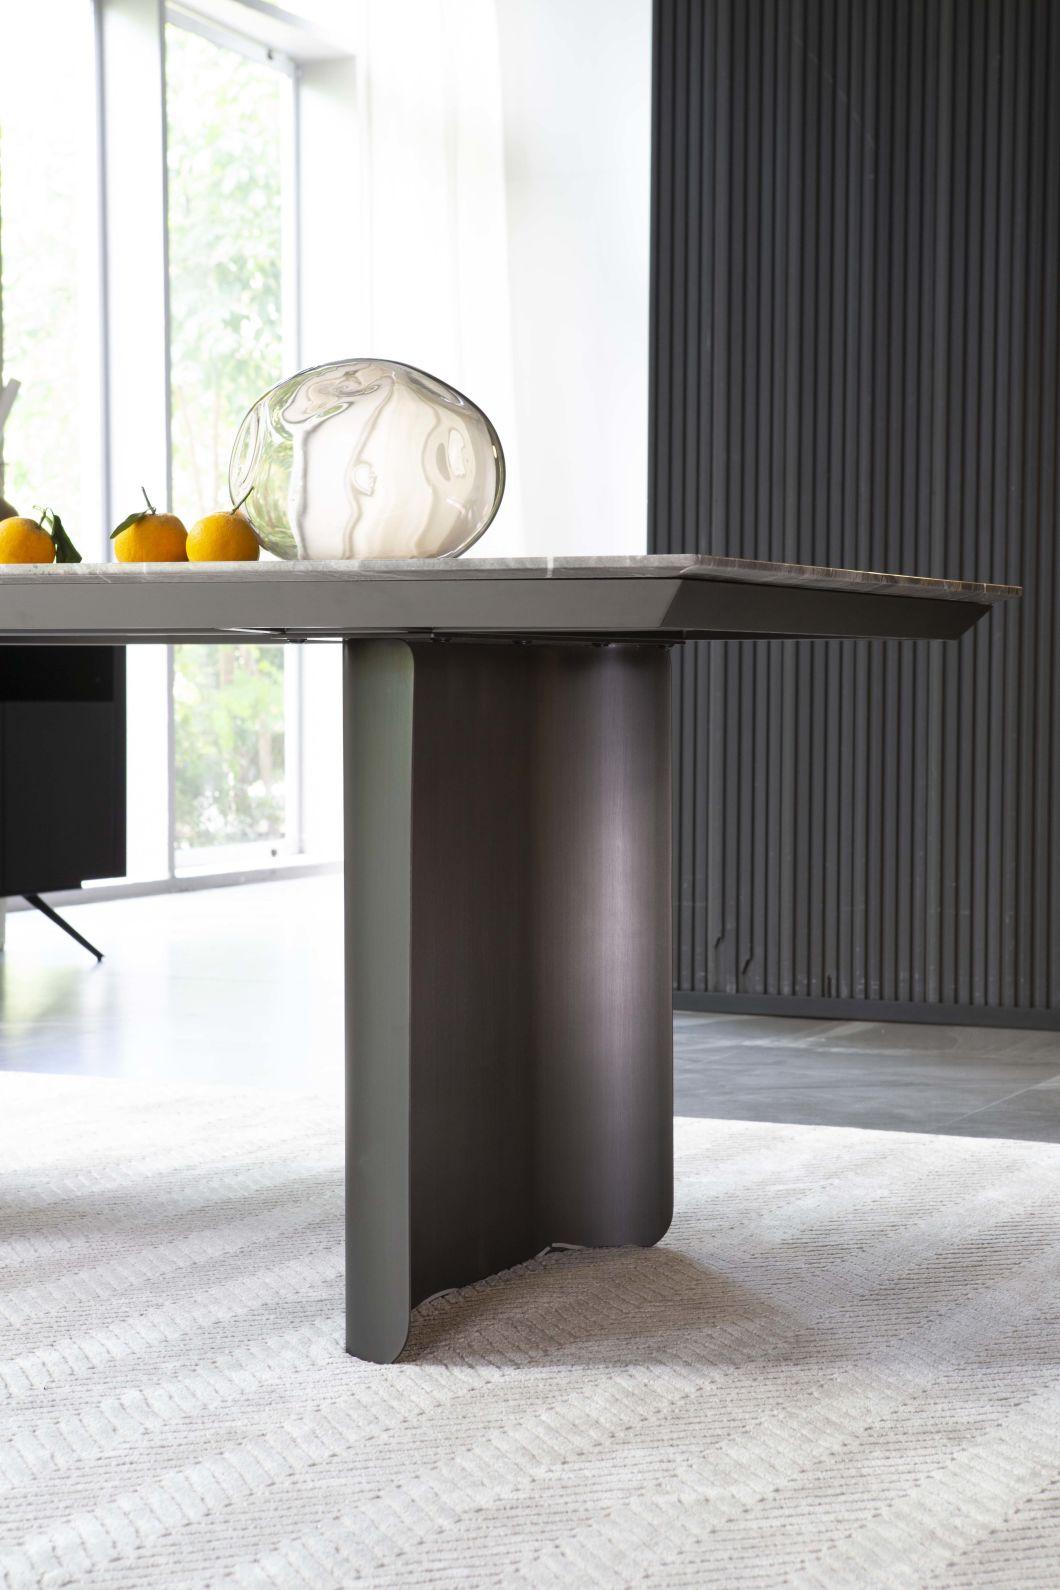 FT155 (1.8 M) Natural Marble Dining Table, Italian Latest Design Natural Marble Dining Table in Home and Commercial Custom